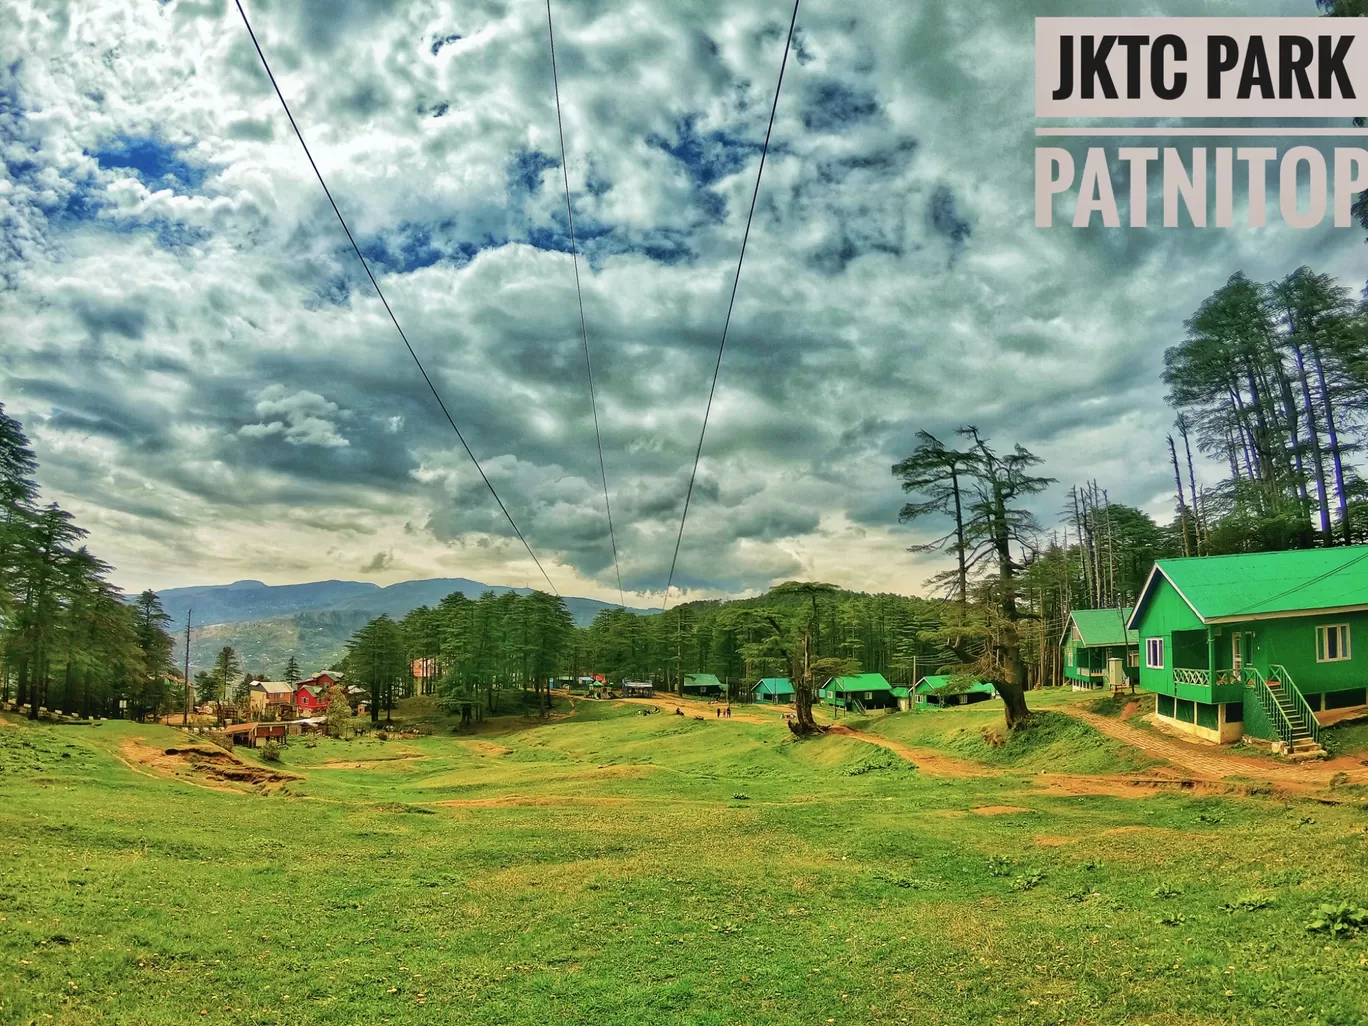 Photo of Patni Top Park By tripathy.babu